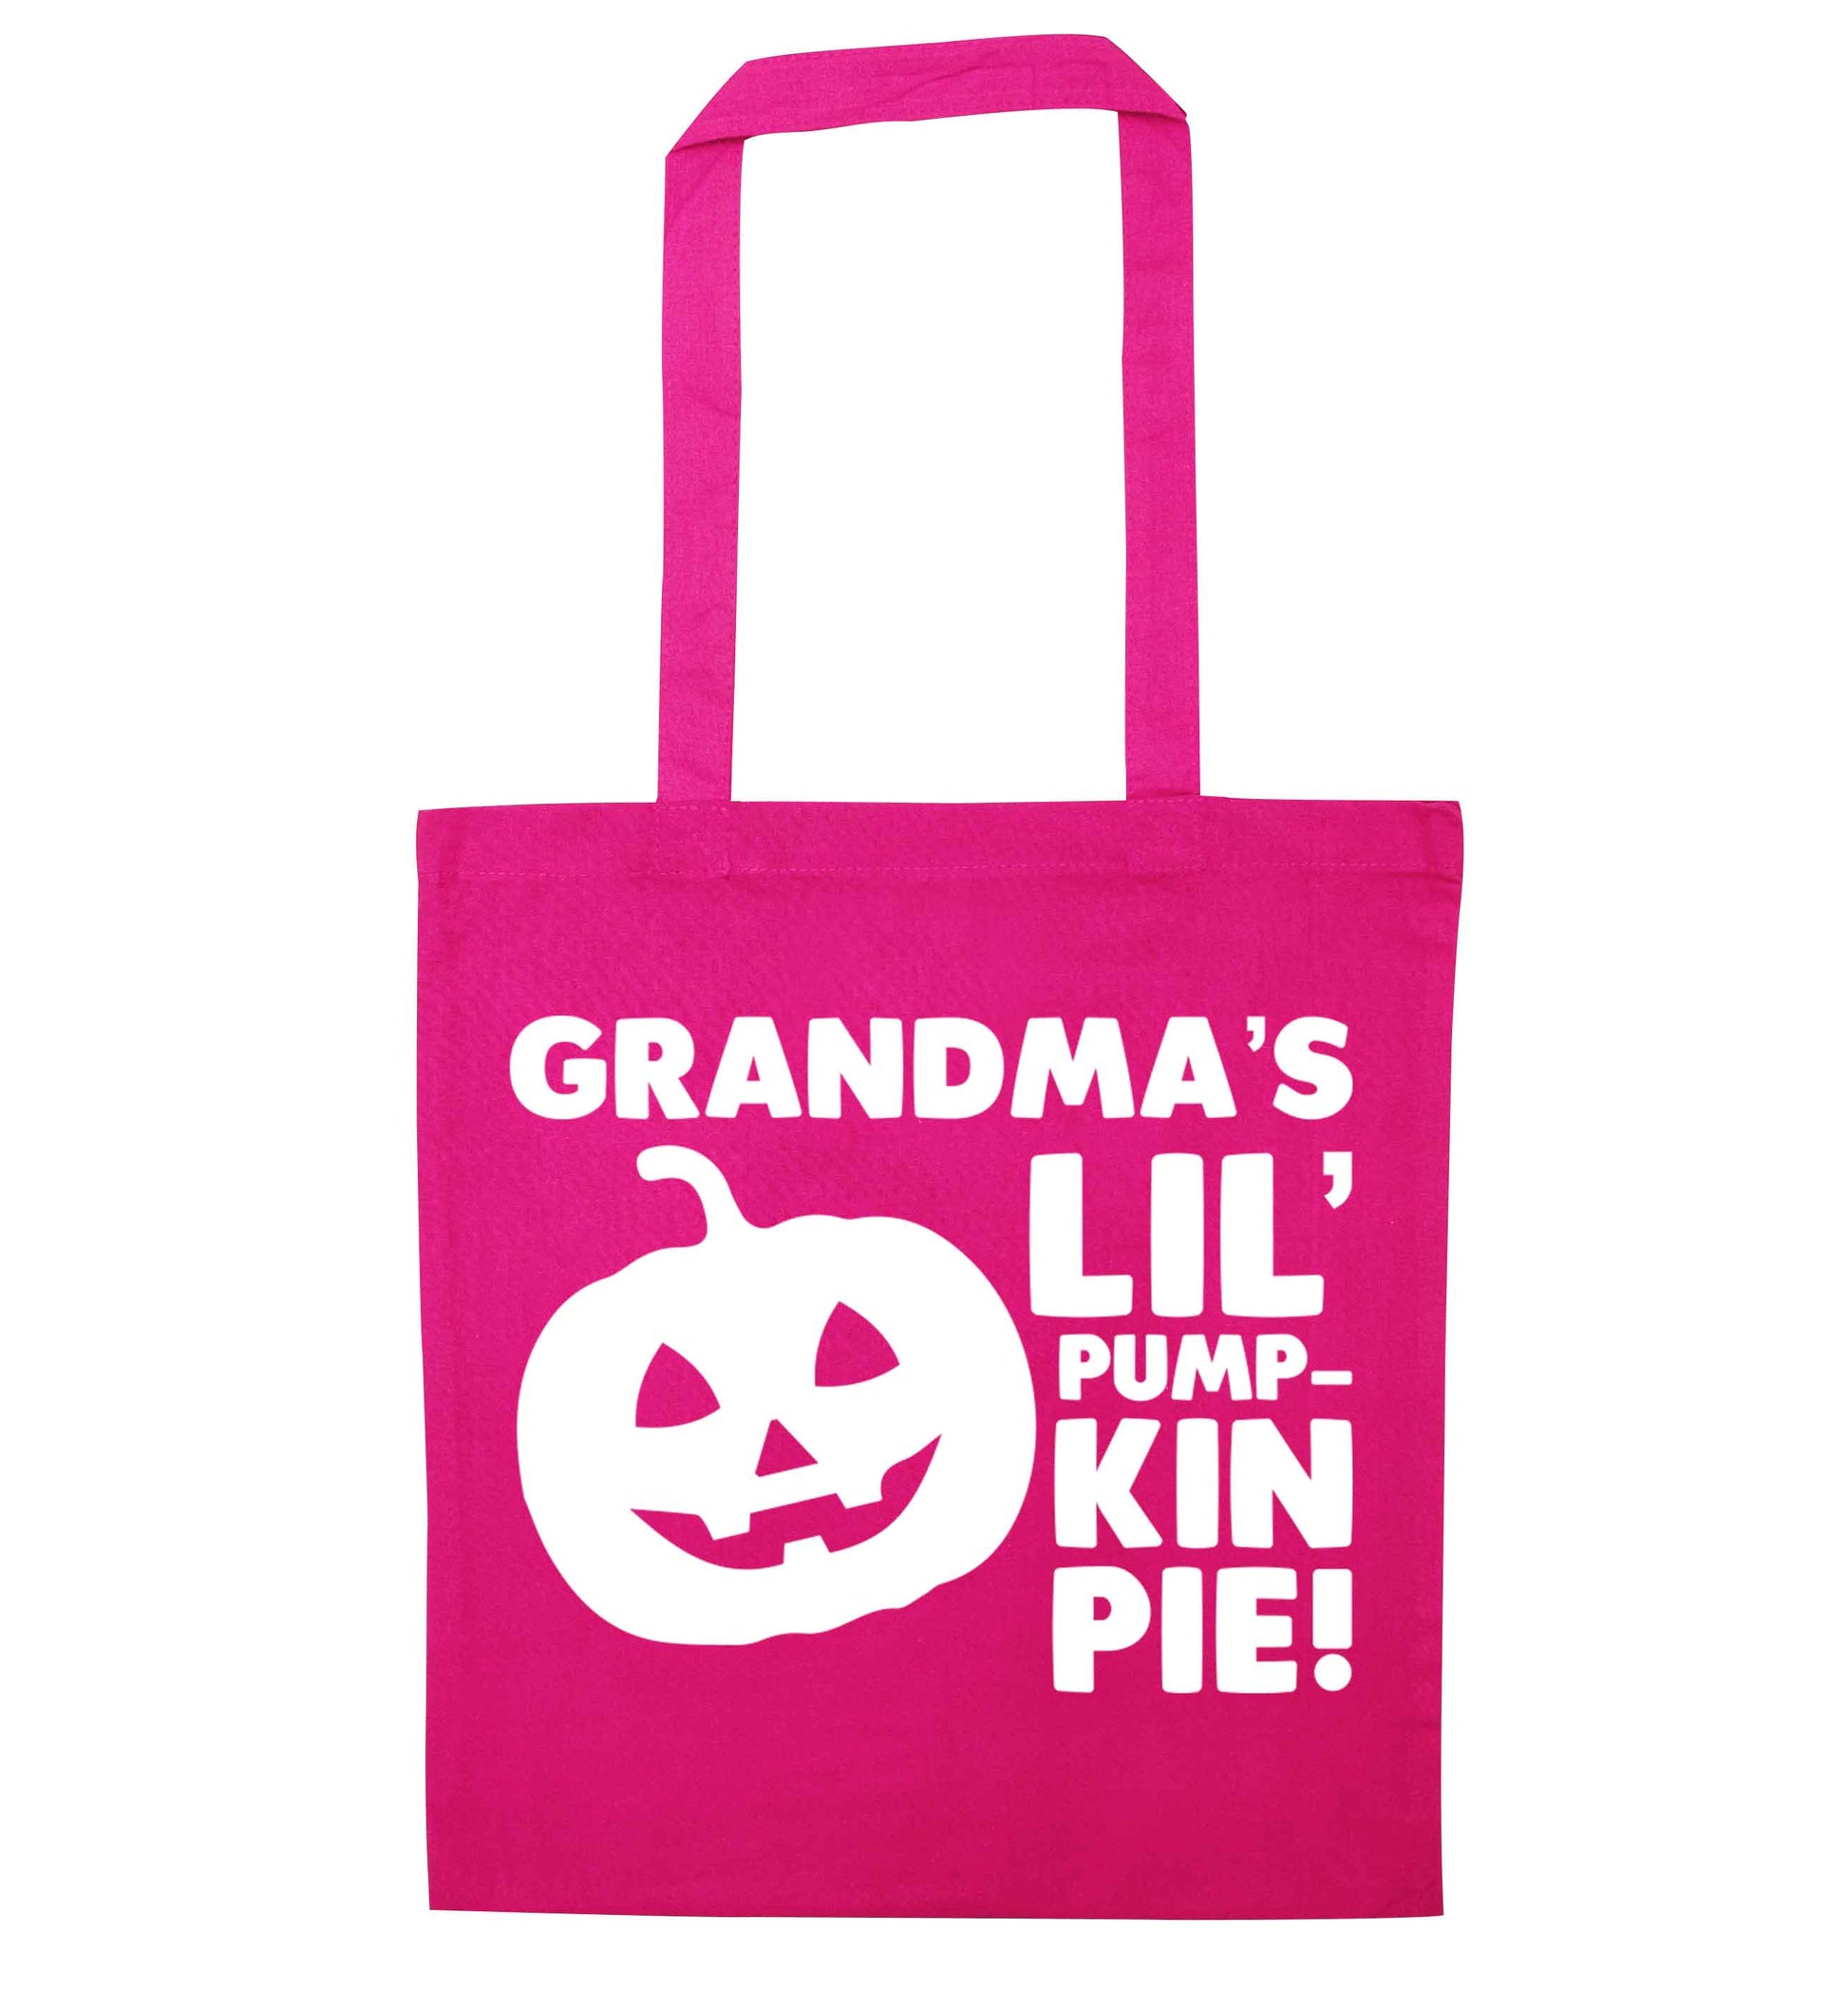 Grandma's lil' pumpkin pie pink tote bag